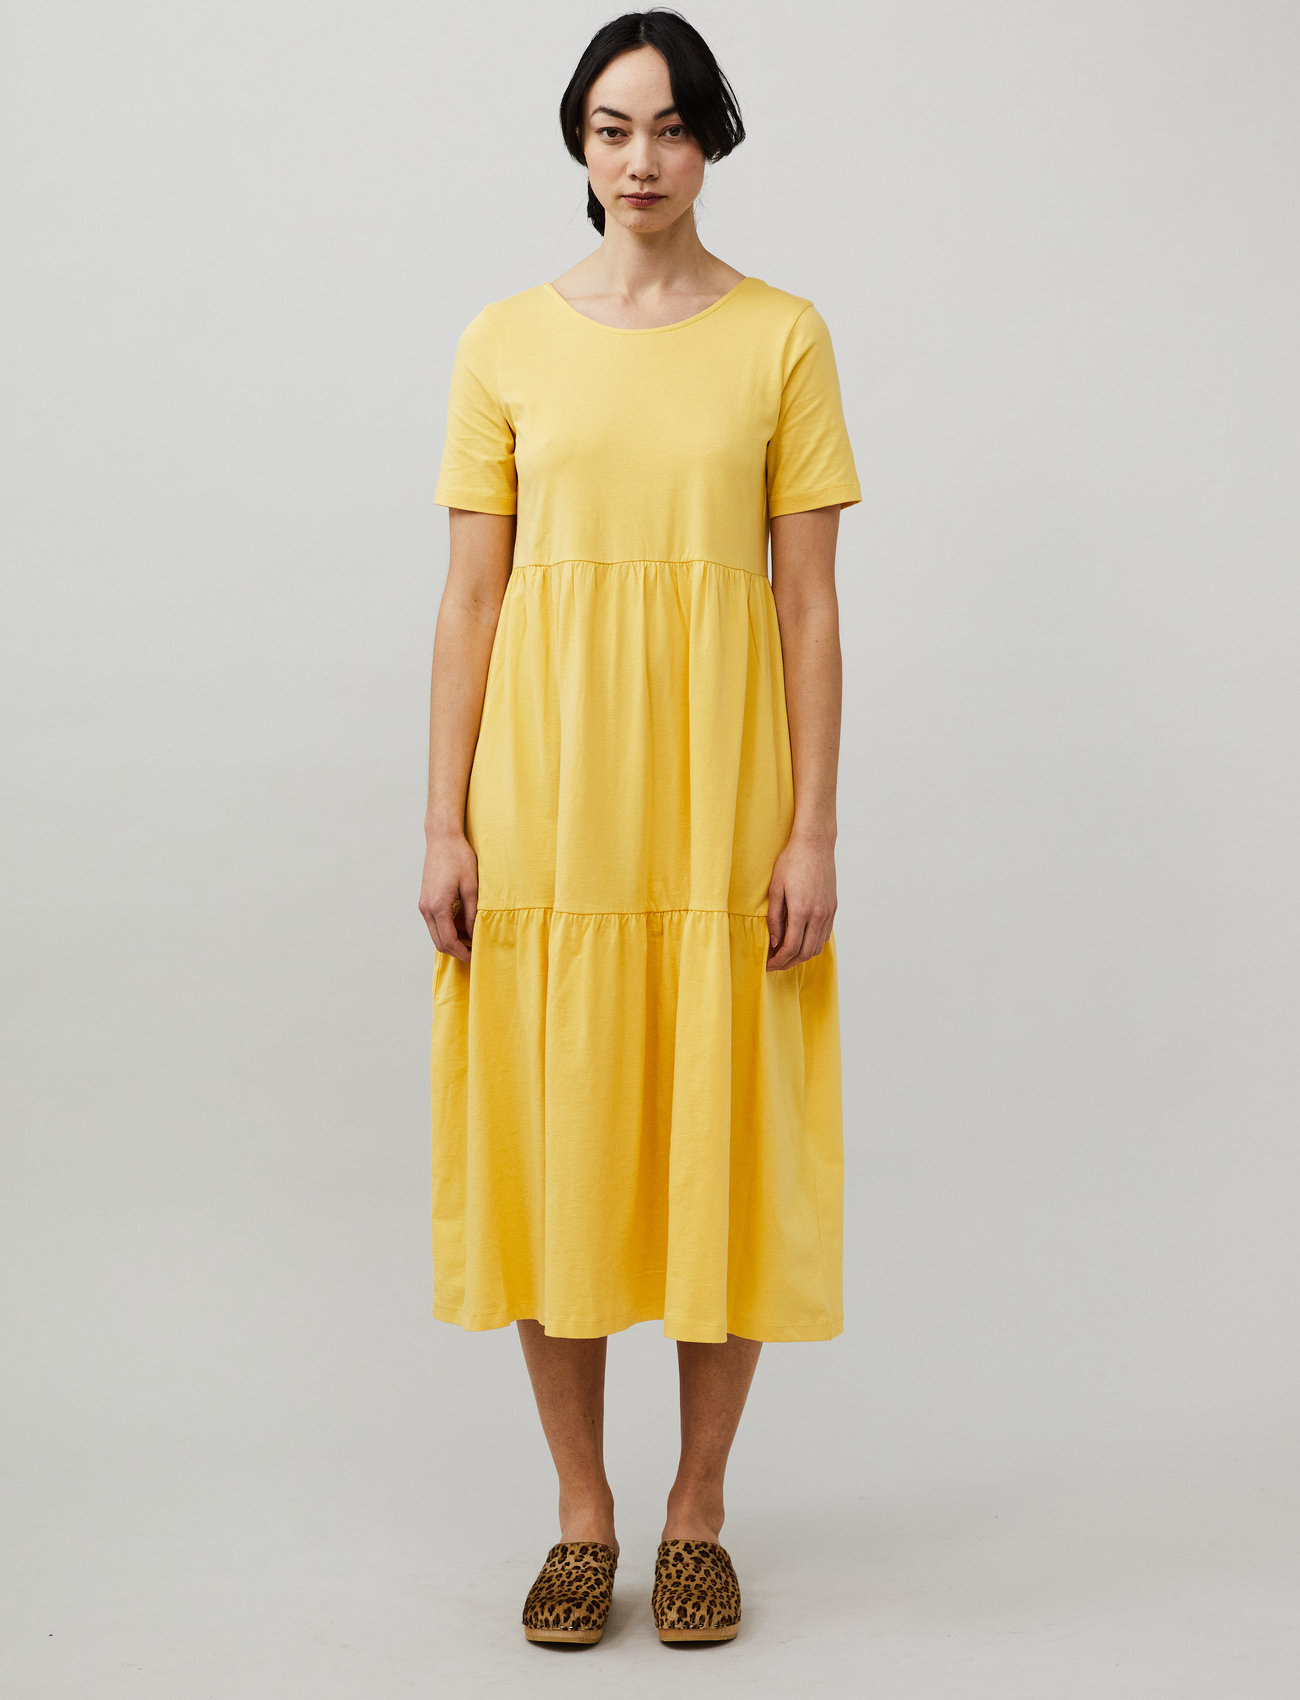 ODD MOLLY - Camellia Dress - t-shirtklänningar - pineapple yellow - 0